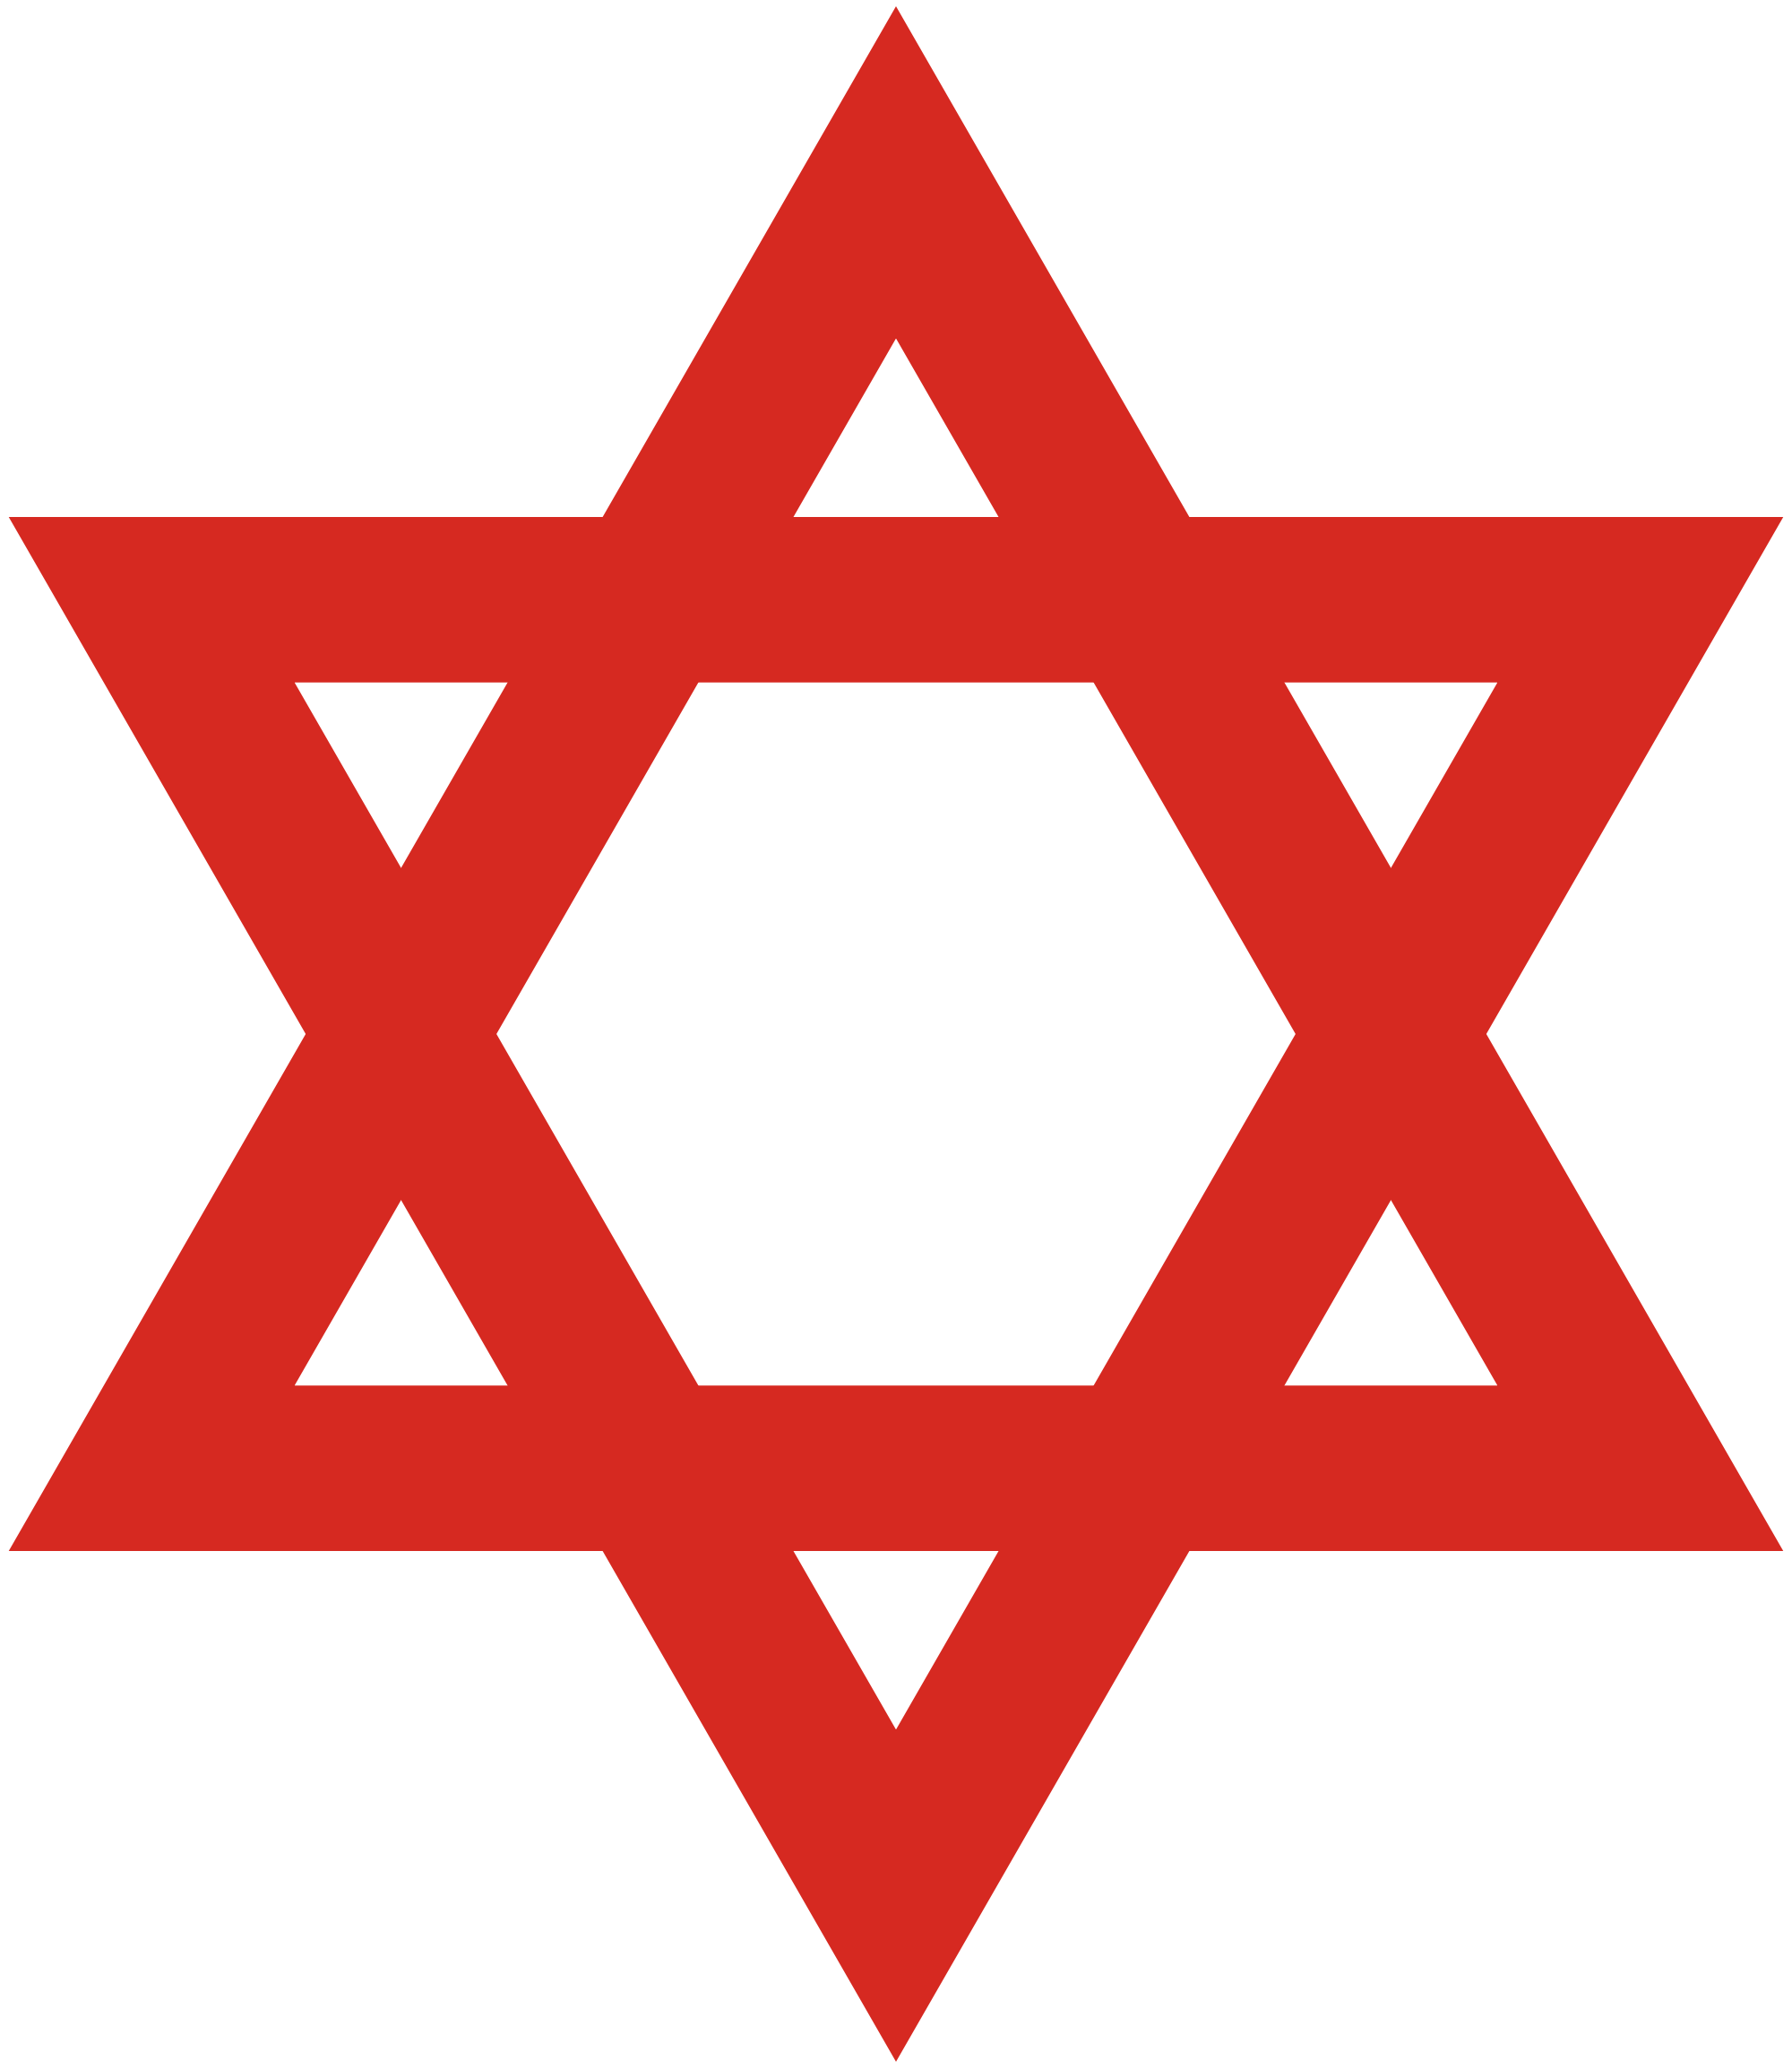 Jewish symbolism - Wikipedia, the free encyclopedia